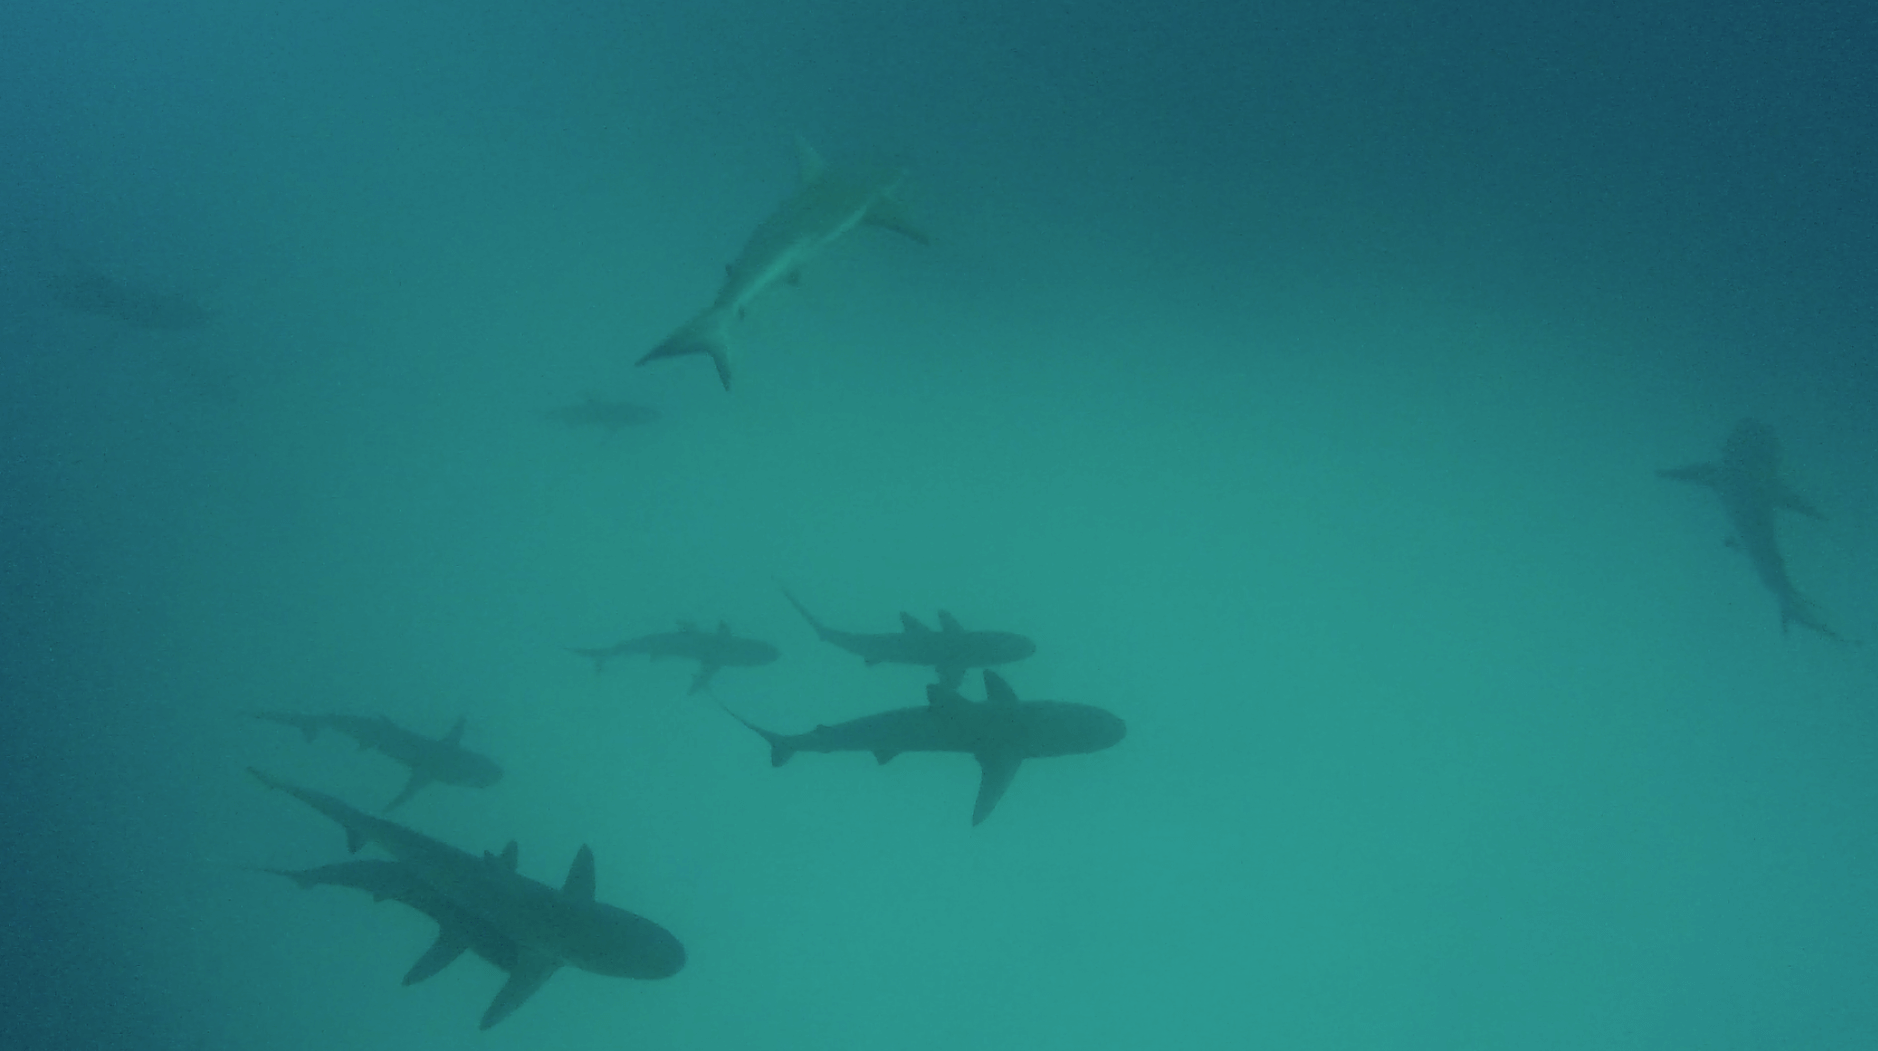 加拉巴哥群島 Ecuador Galapagos Islands Kicker Rock 鎚頭鯊 hammerhead shark